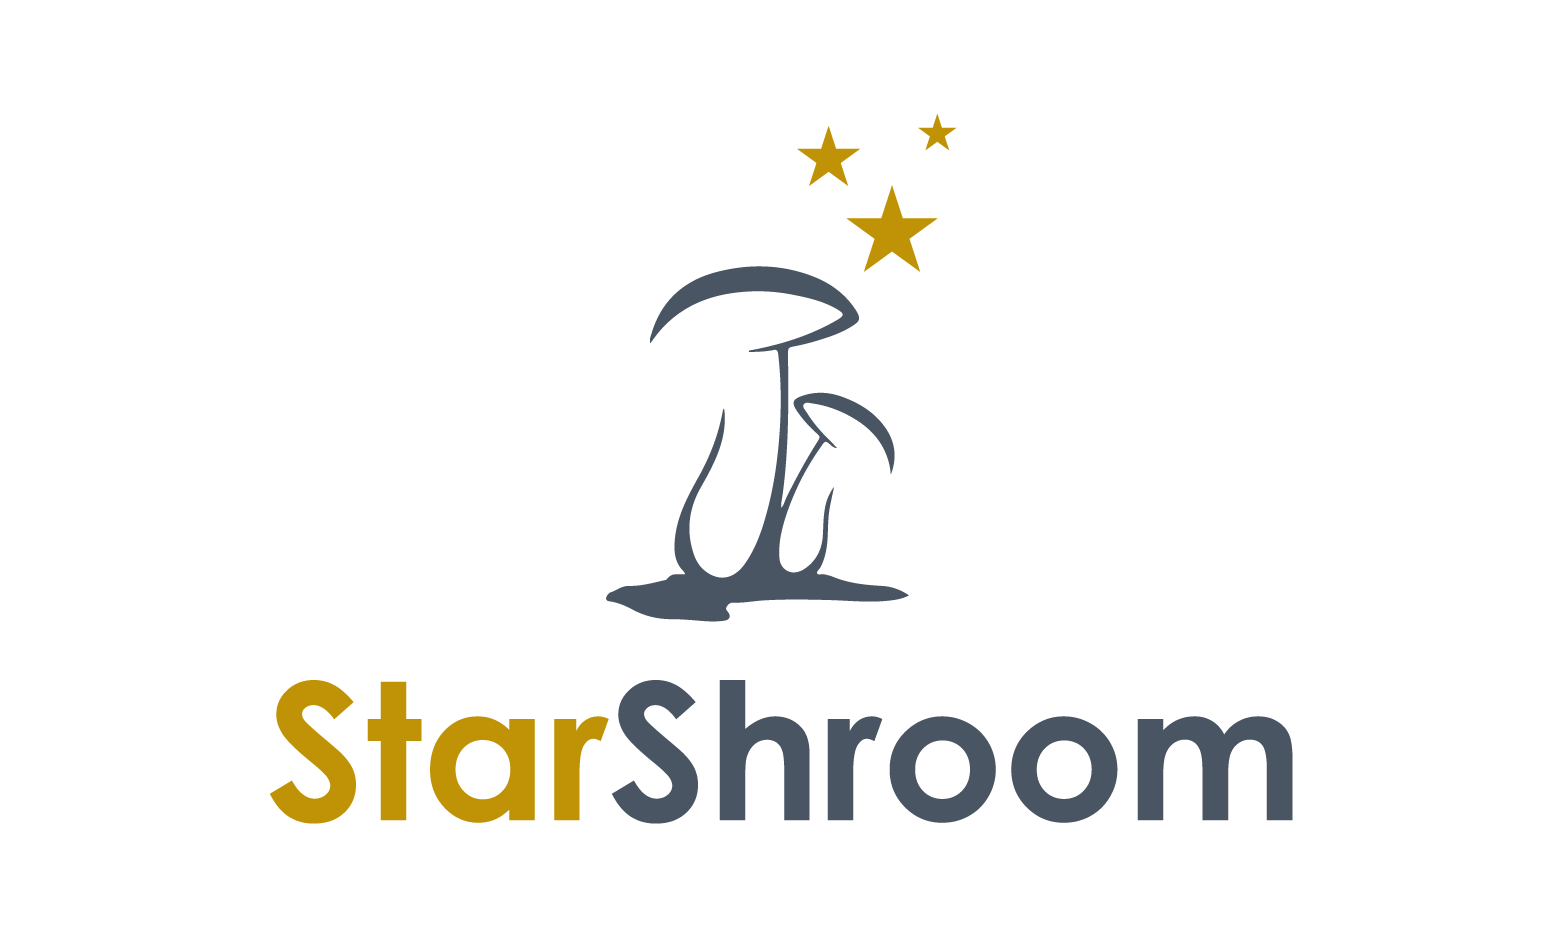 StarShroom.com - Creative brandable domain for sale